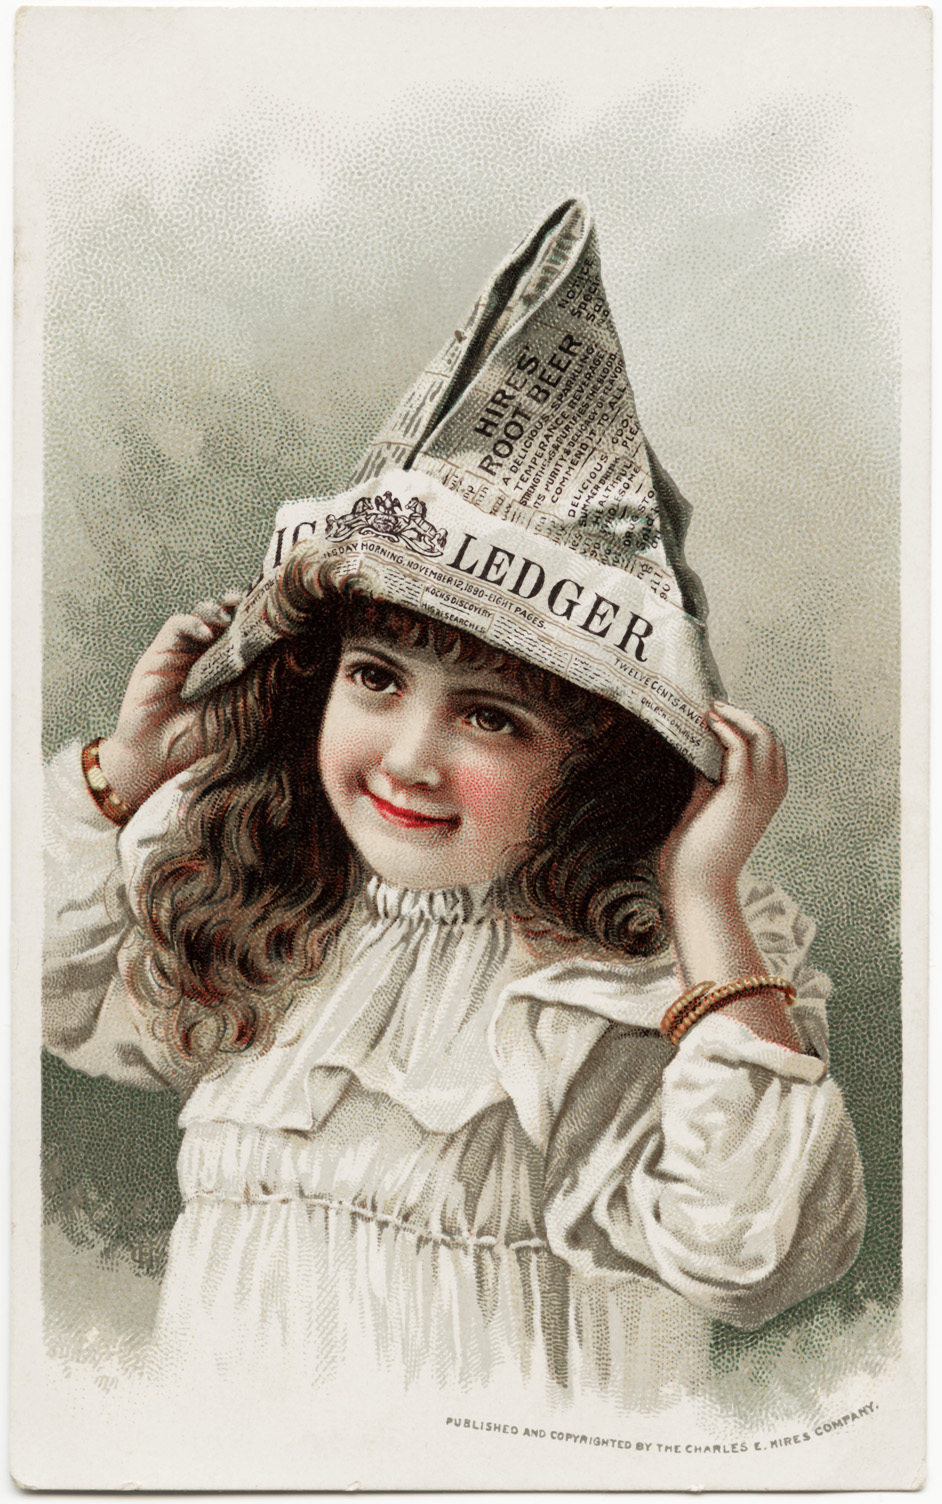 hires beer, vintage trading card, victorian advertising card, newspaper hat, girl with paper hat, free vintage image child, old medicine